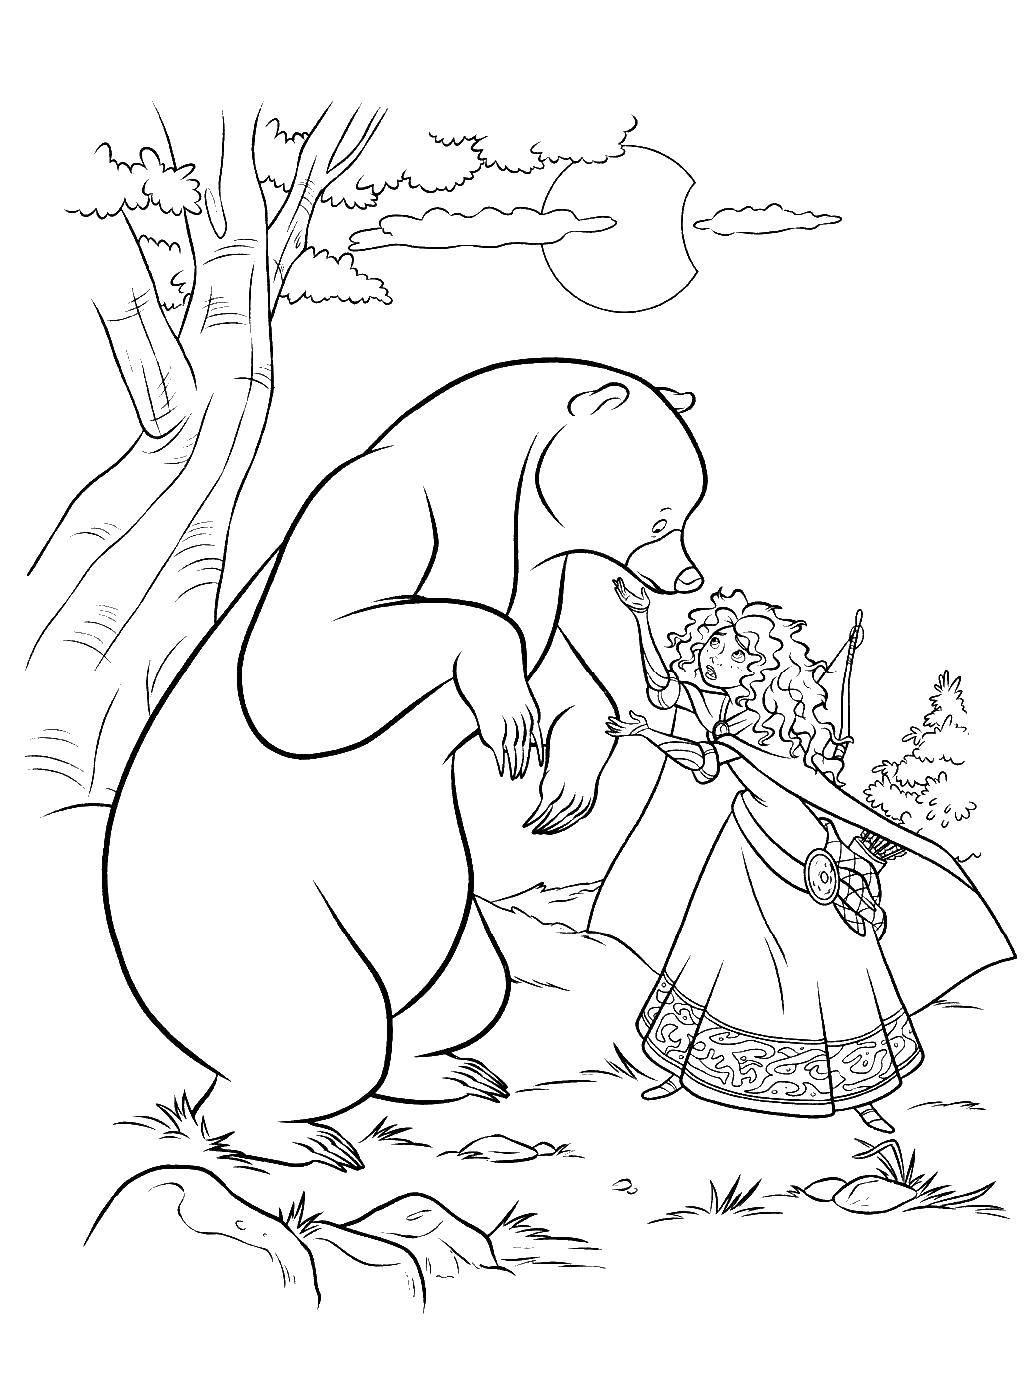 Название: Раскраска Медведь и принцесска. Категория: храбрая сердцем. Теги: Храбрая сердцем, мультфильмы, принцесса, медведь.